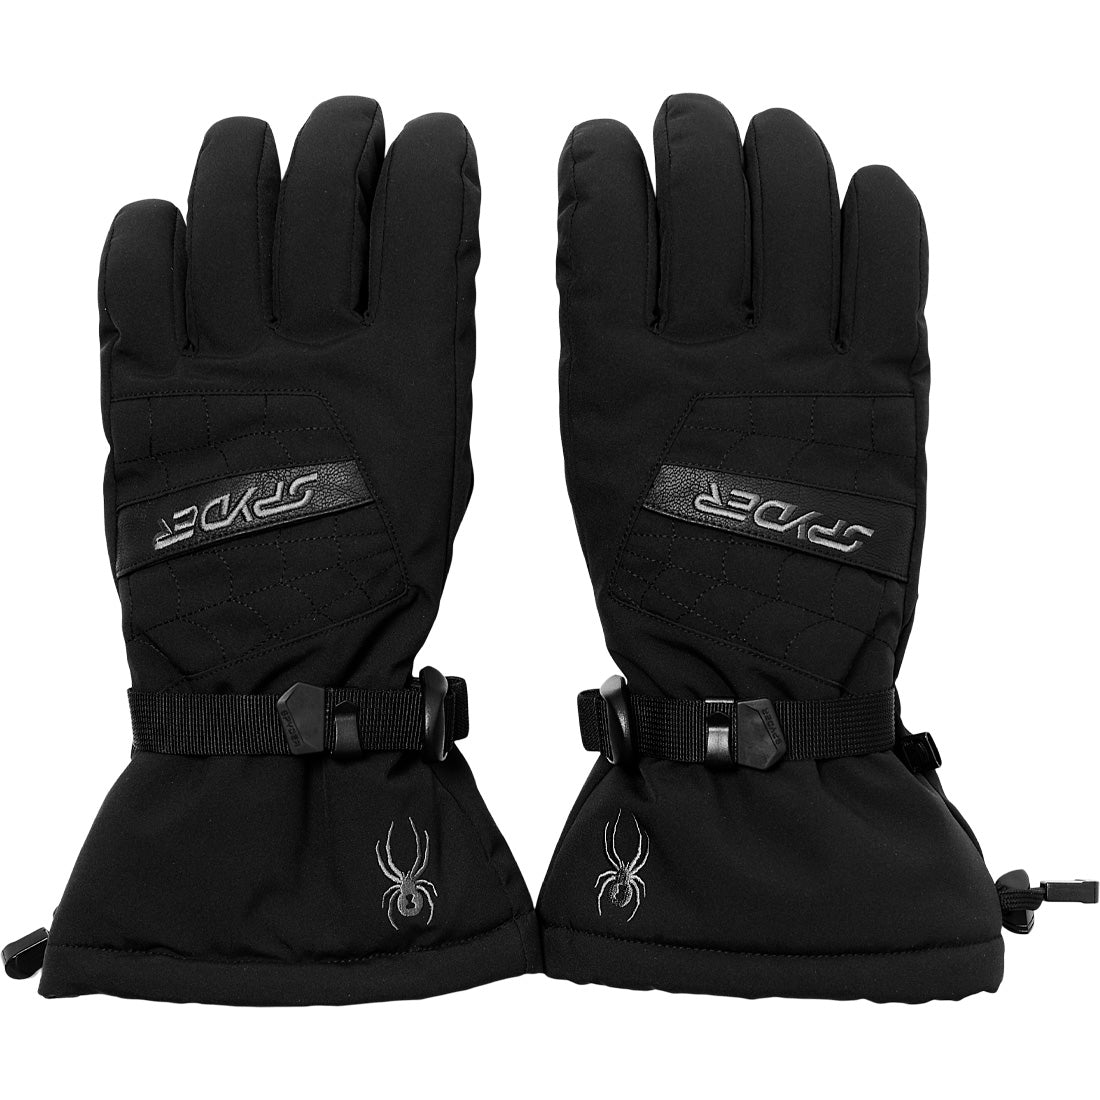 Spyder Crucial Glove - Men's